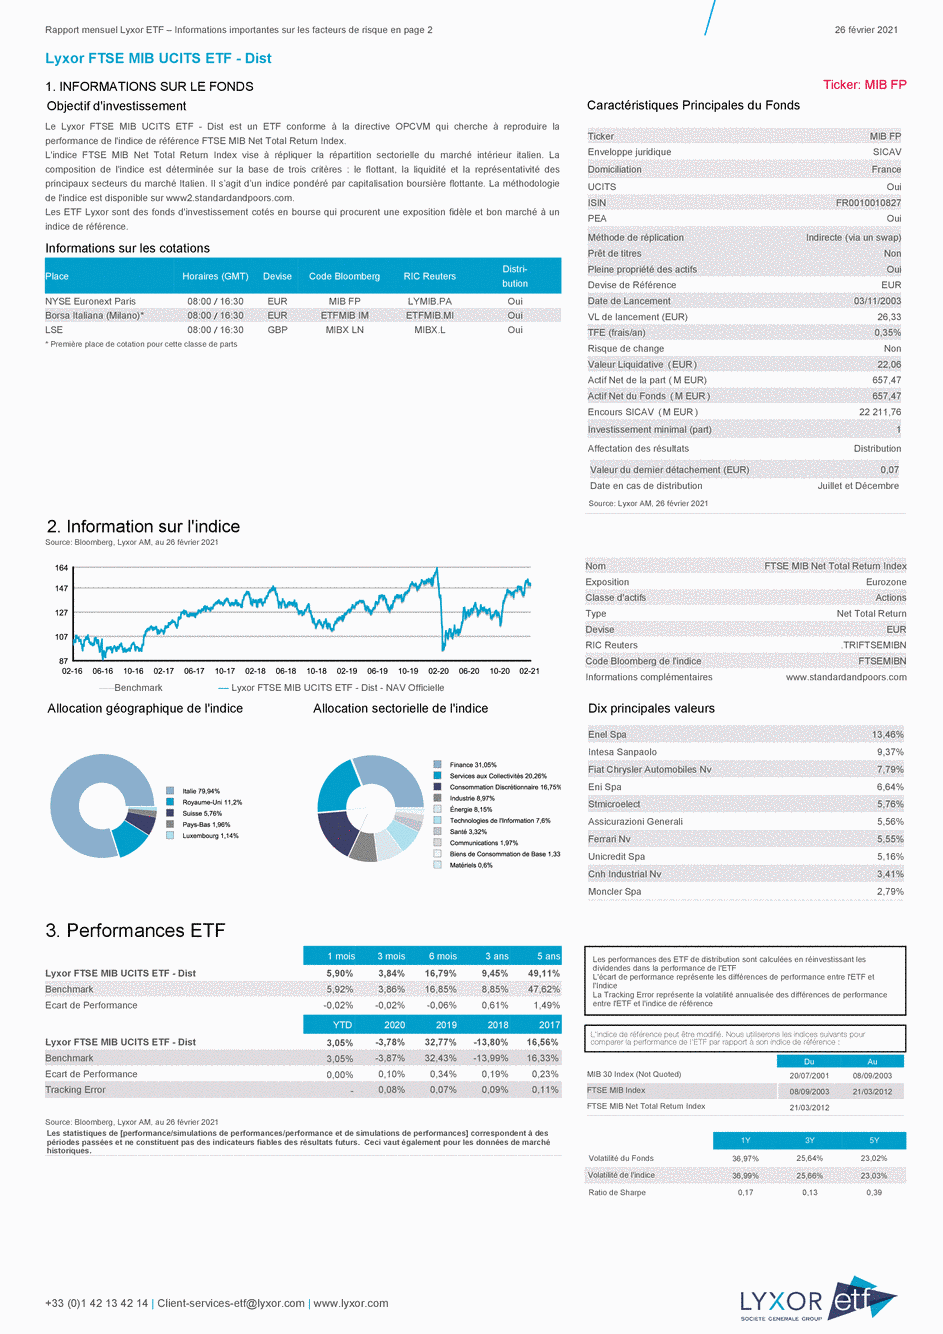 Reporting Lyxor FTSE MIB UCITS ETF - Dist - 26/02/2021 - Français